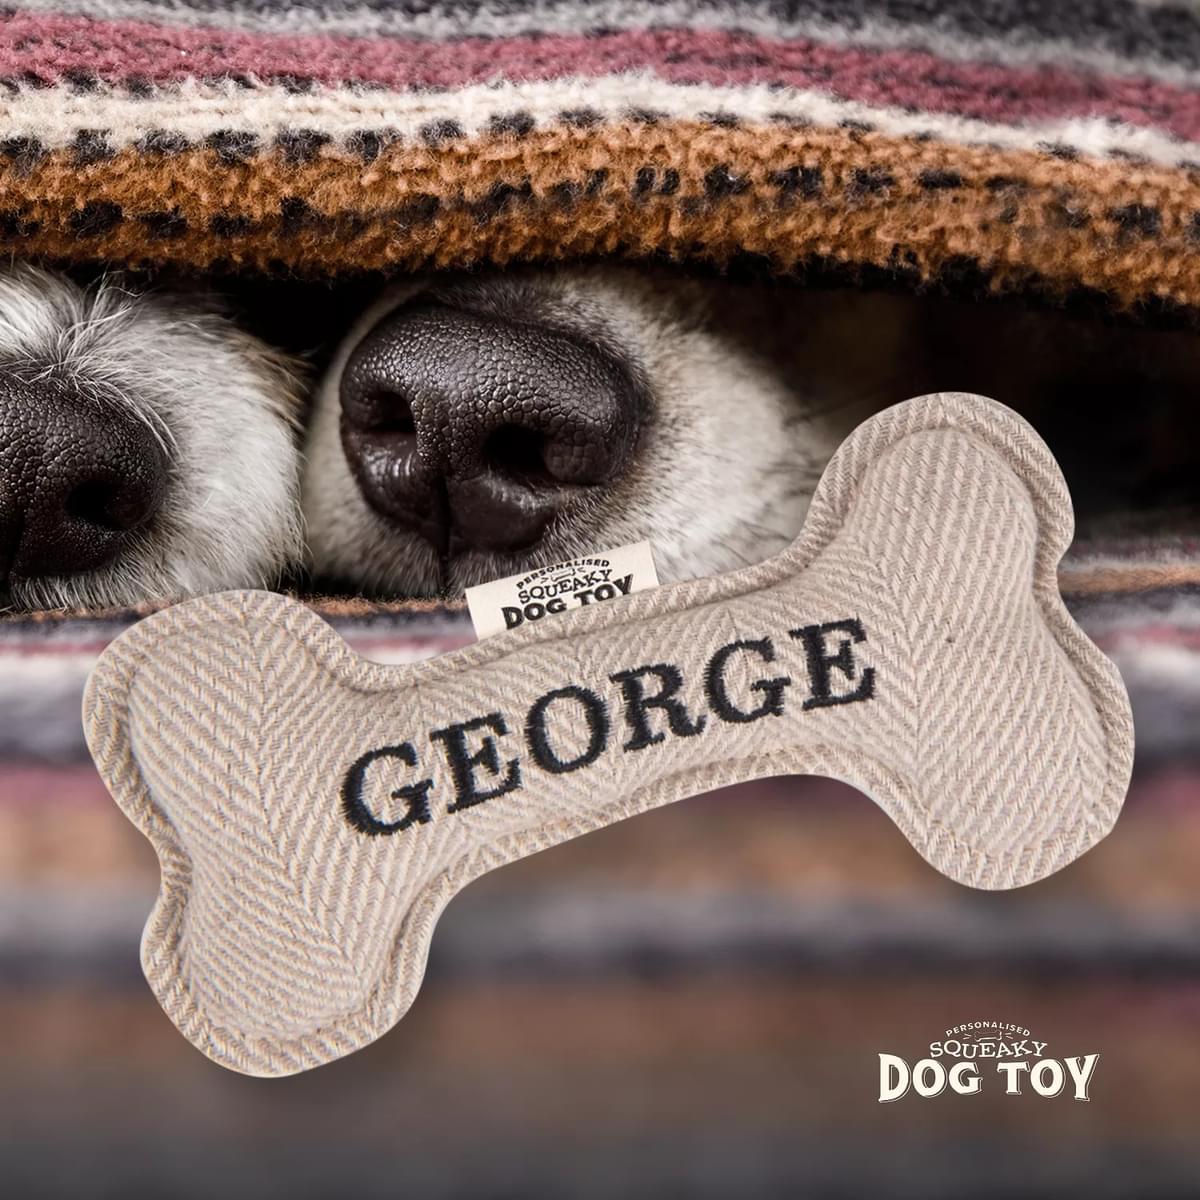 Named Squeaky Dog Toy- George. Bone shaped herringbone tweed pattern dog toy. 